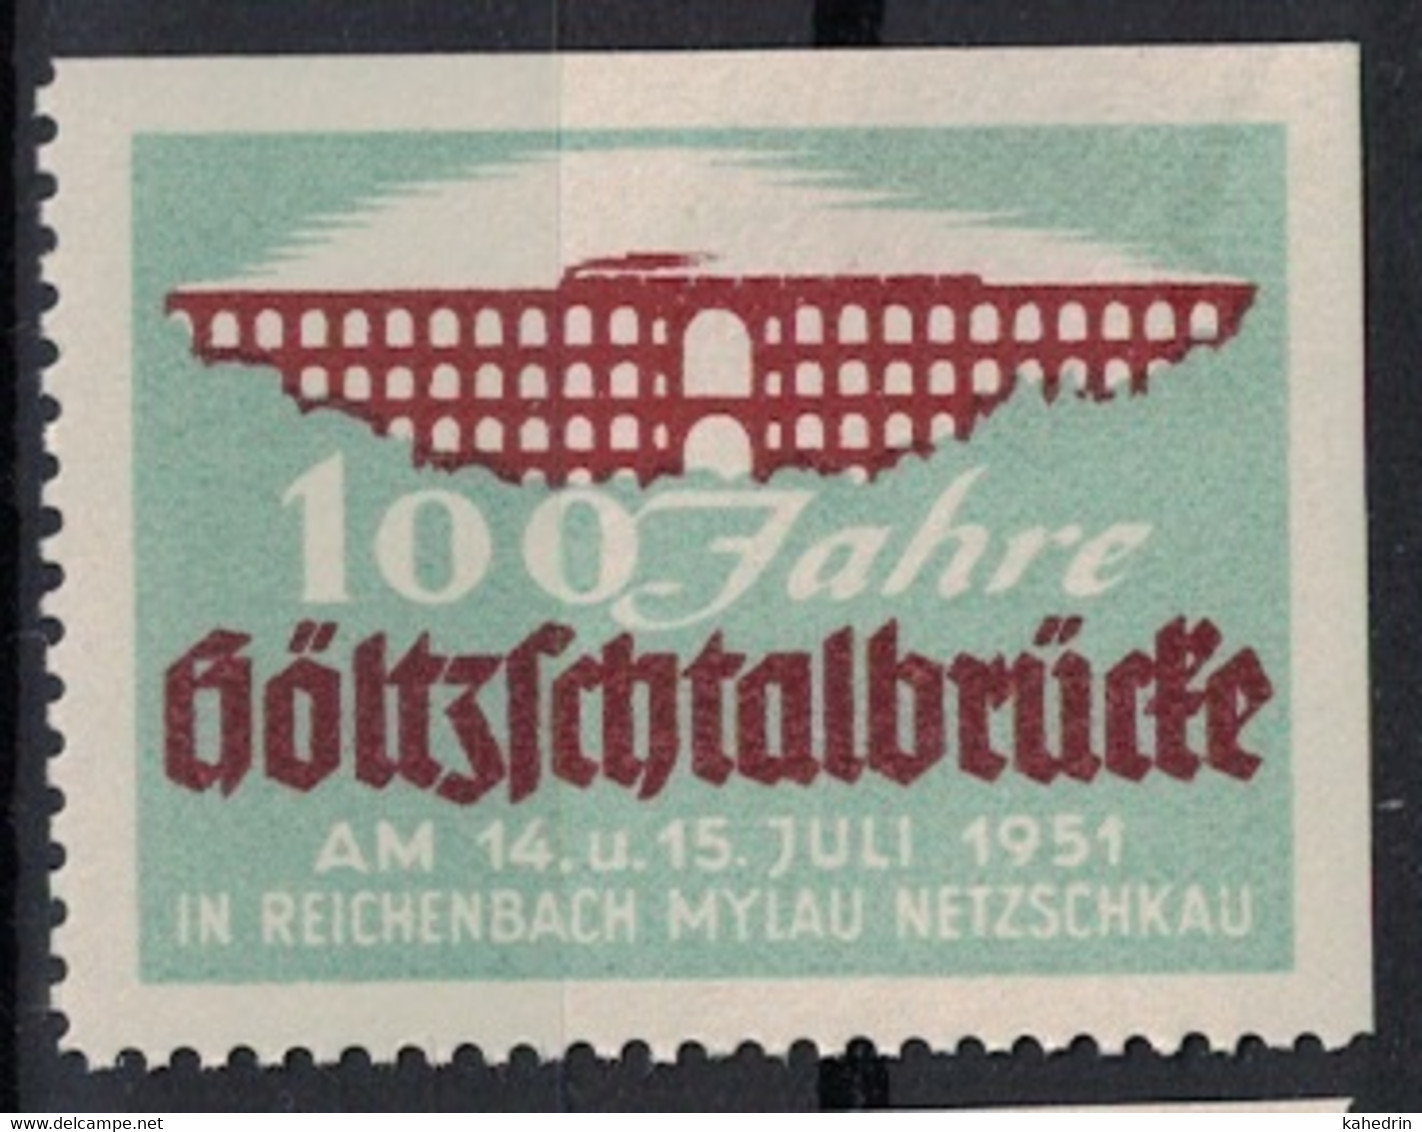 Germany 1951 Poster Stamp Vignette Reklamemarke Bridge Train, 100 Jahre Göltzschtalbrücke Reichenbach Mylau Netzschkau - Viñetas De Fantasía